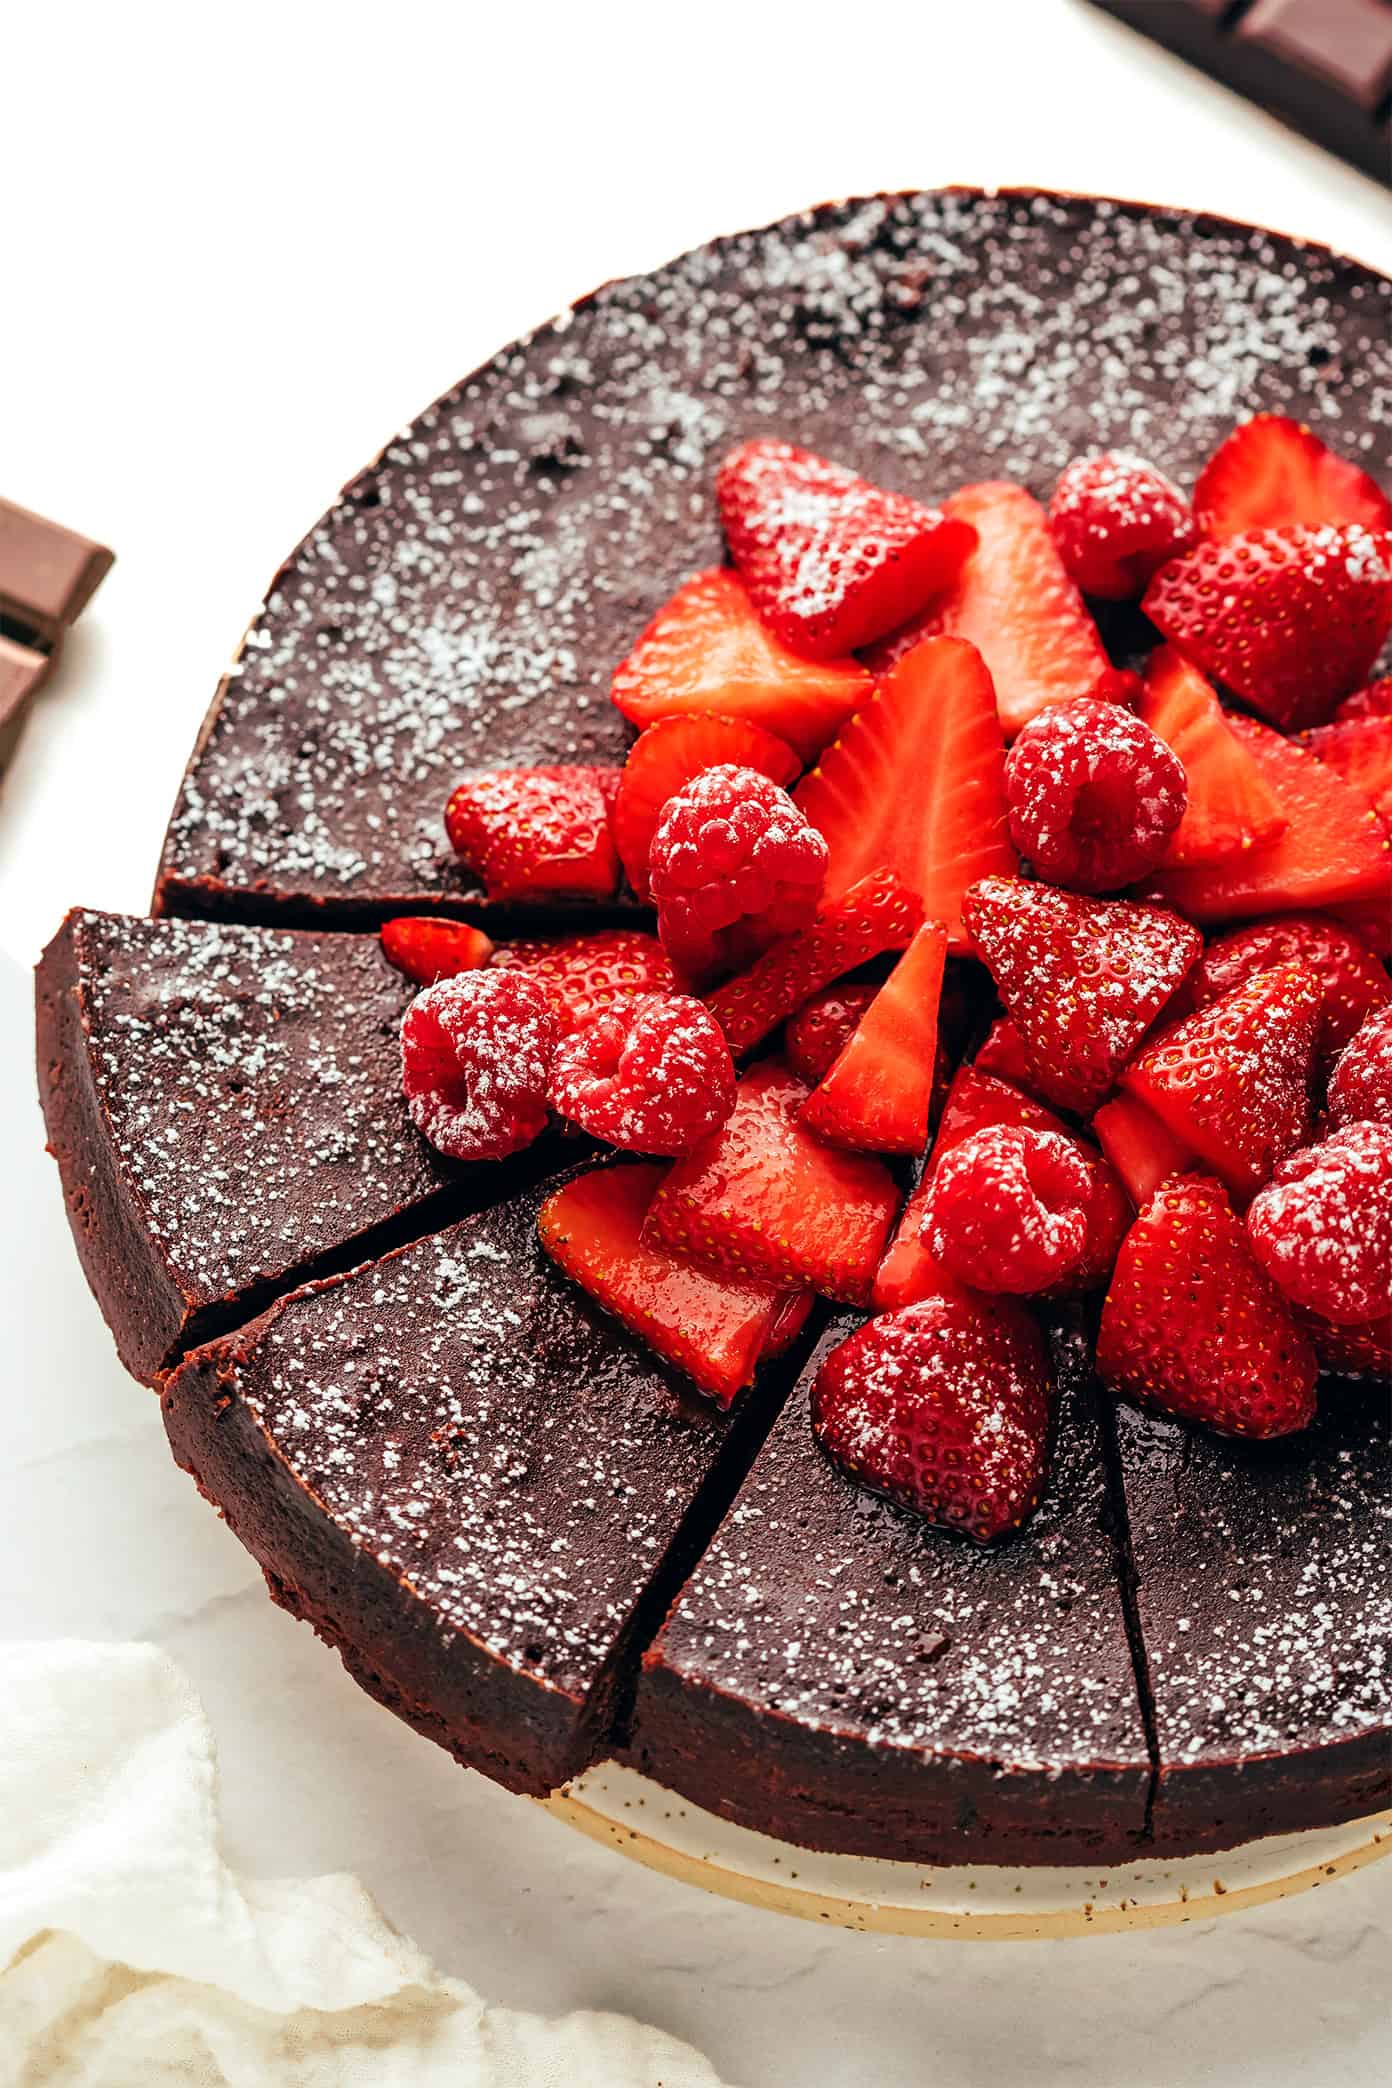 https://www.gimmesomeoven.com/wp-content/uploads/2014/02/Flourless-Chocolate-Cake-8-1.jpg